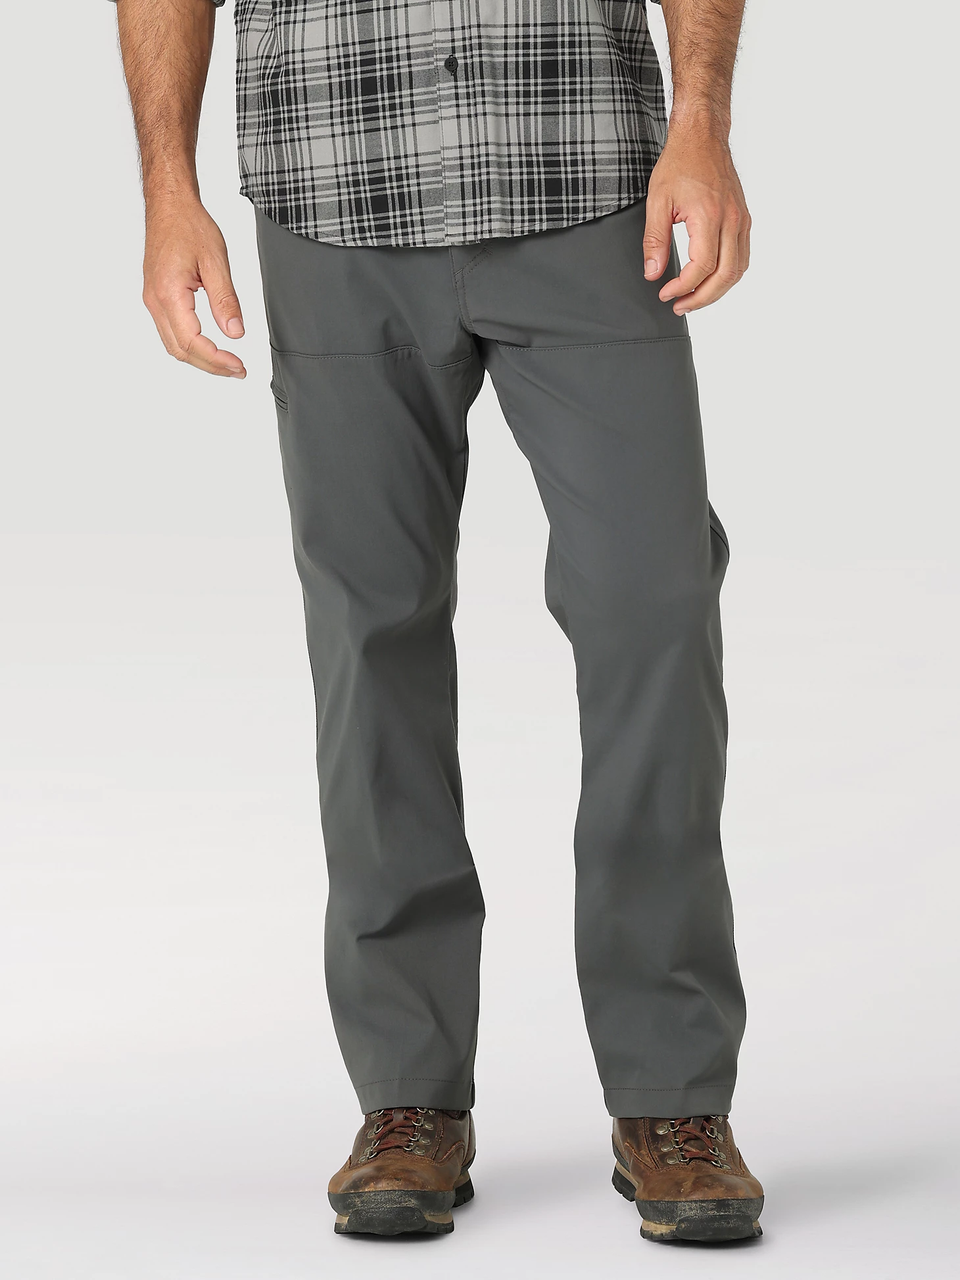 Wrangler™ ATG Men's Synthetic Utility Pants Dark Shadow NS849DS